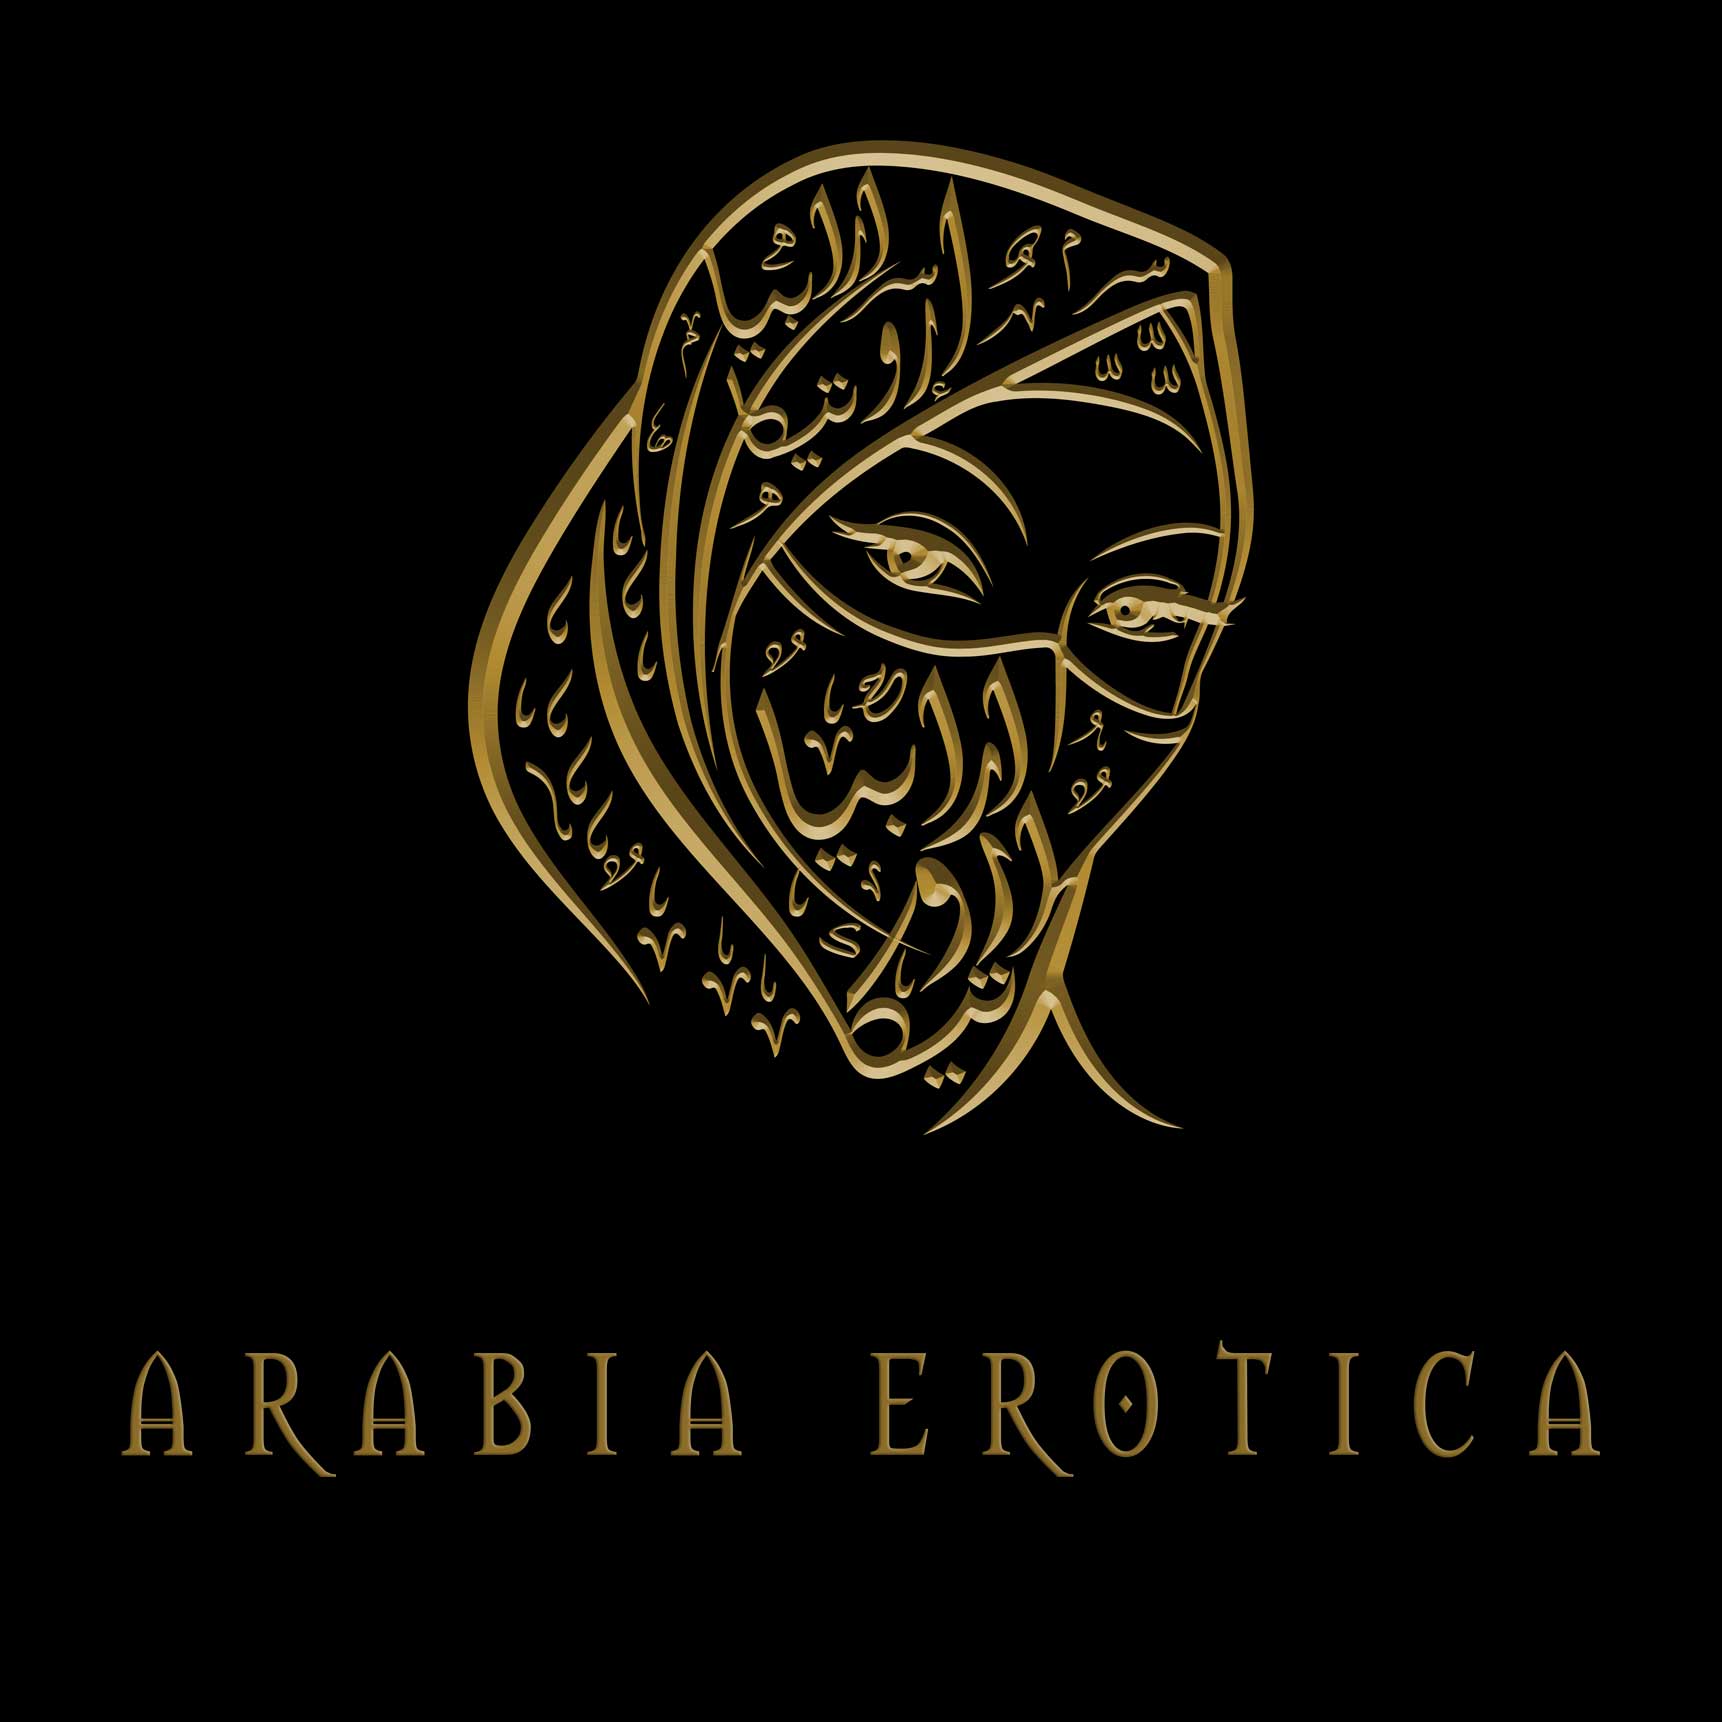 David Ghazawy's Arabia Erotica